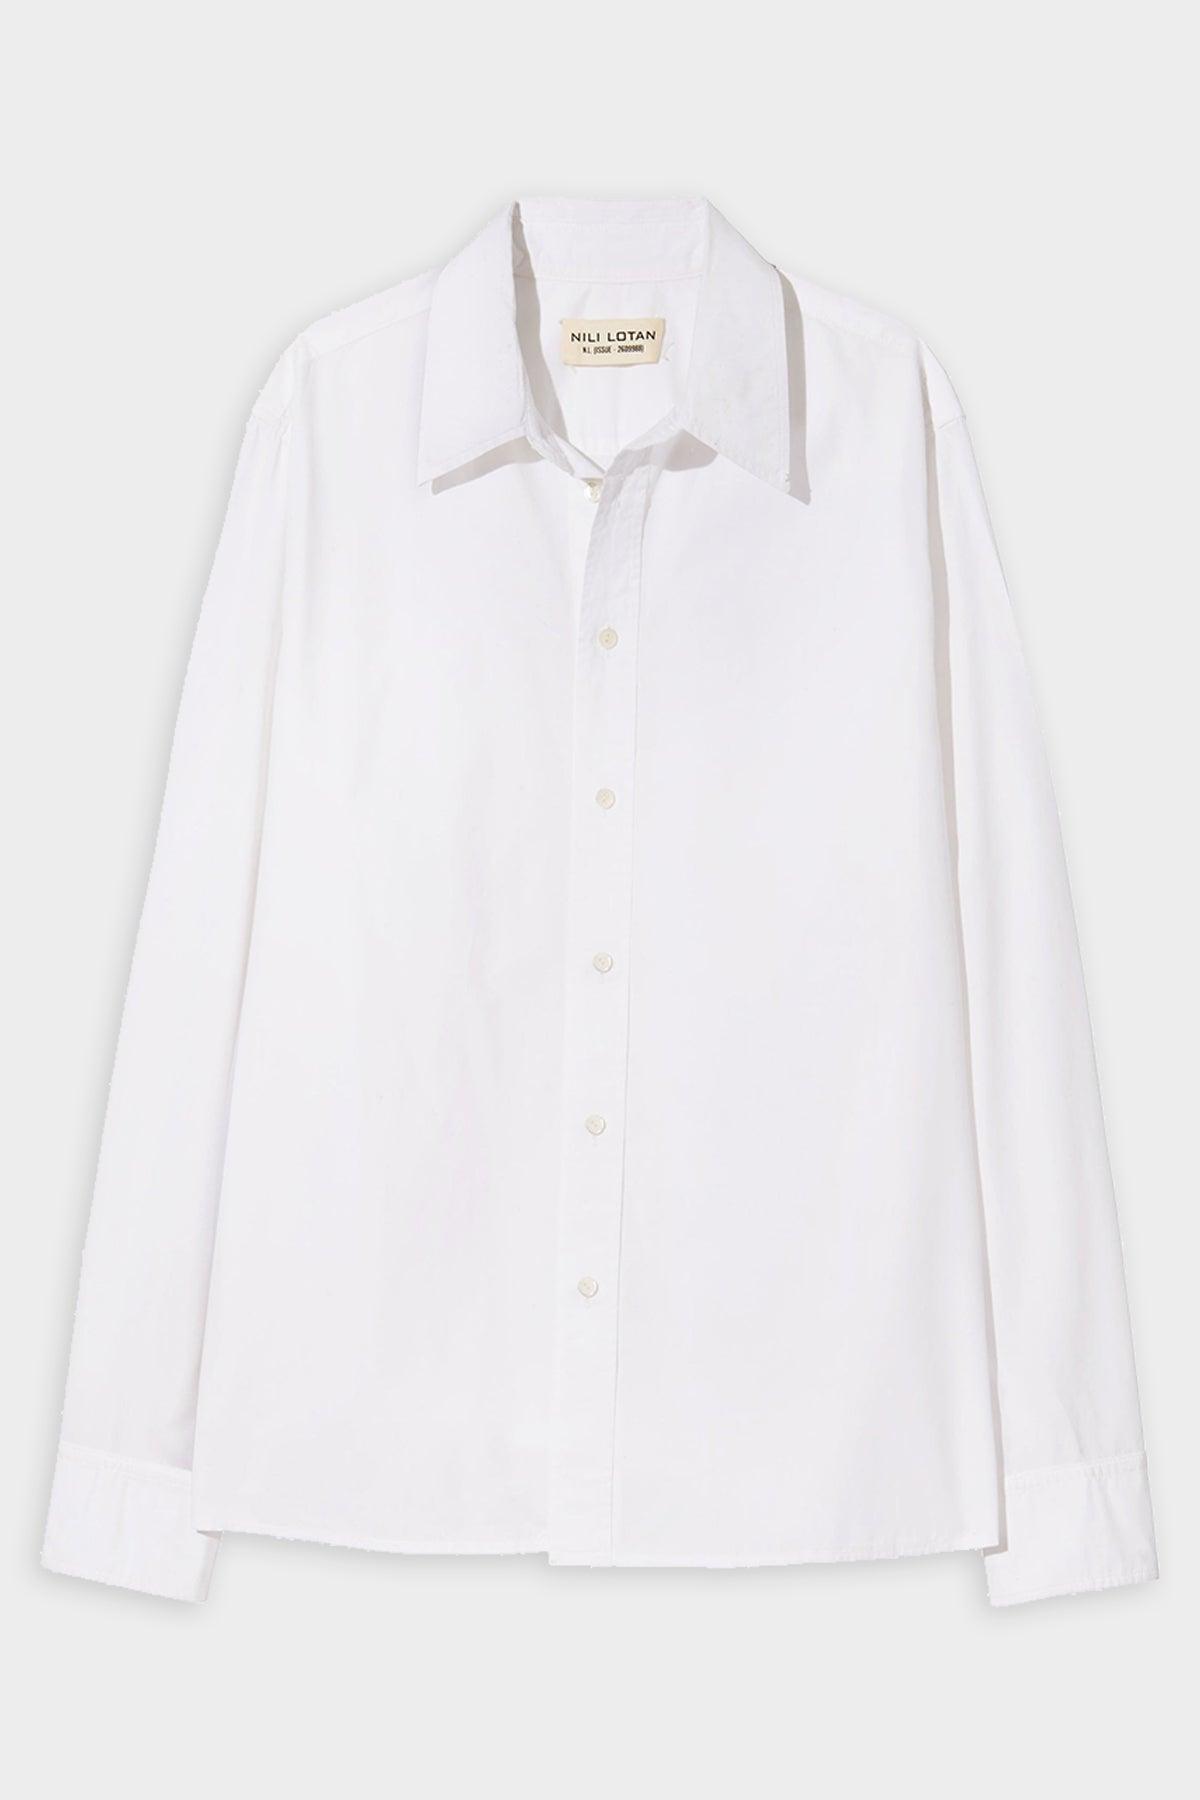 Nili Lotan Raphael Classic Shirt In White | Lyst